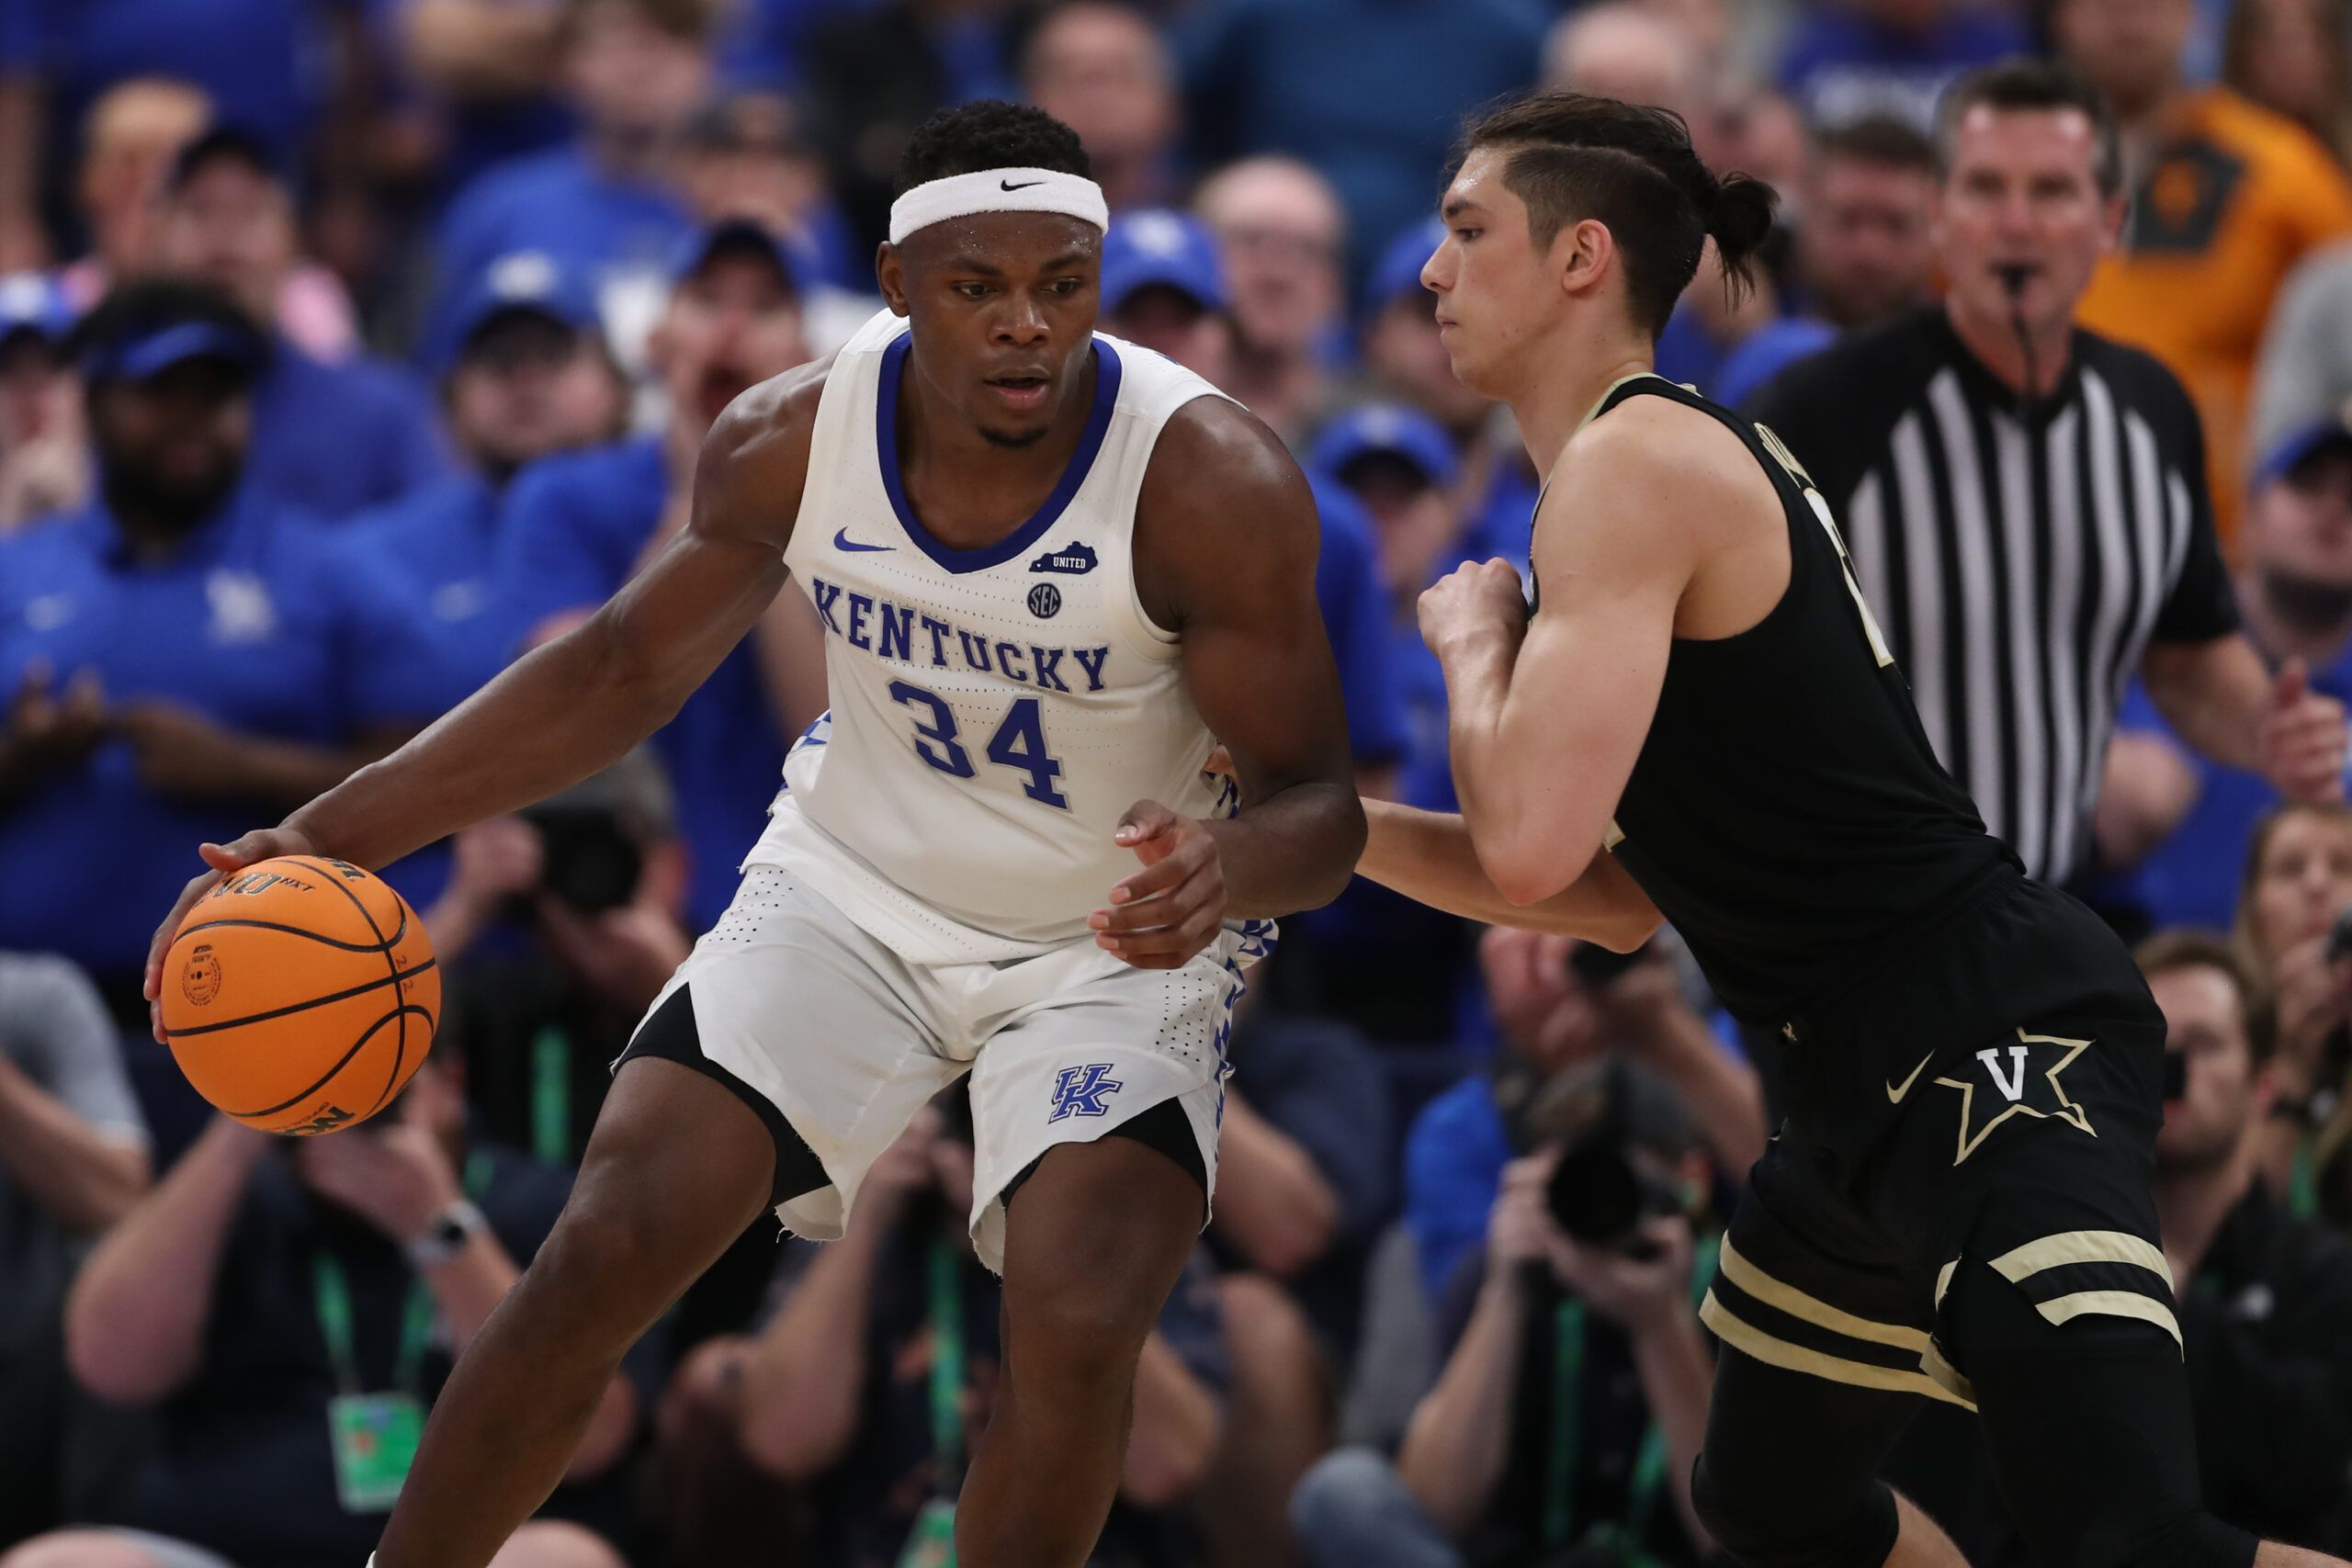 Three potential CONCERNS for Kentucky basketball this upcoming season